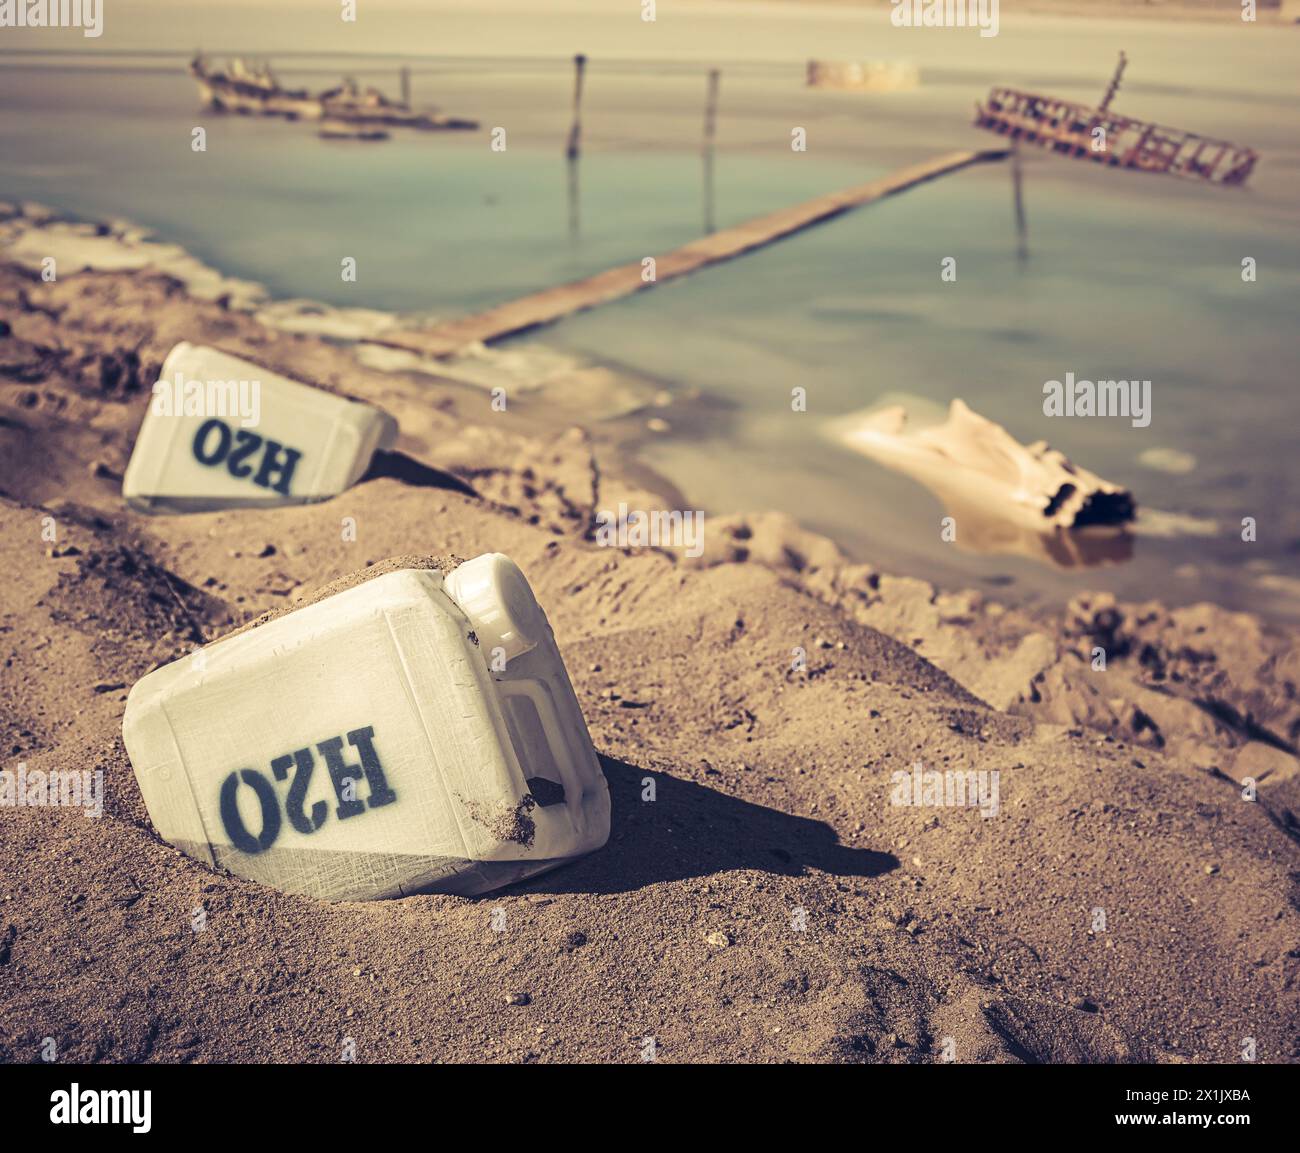 Lattine di acqua sporca in una città deserta e inquinata. Acqua inquinata in una città post-apocalittica. Foto Stock